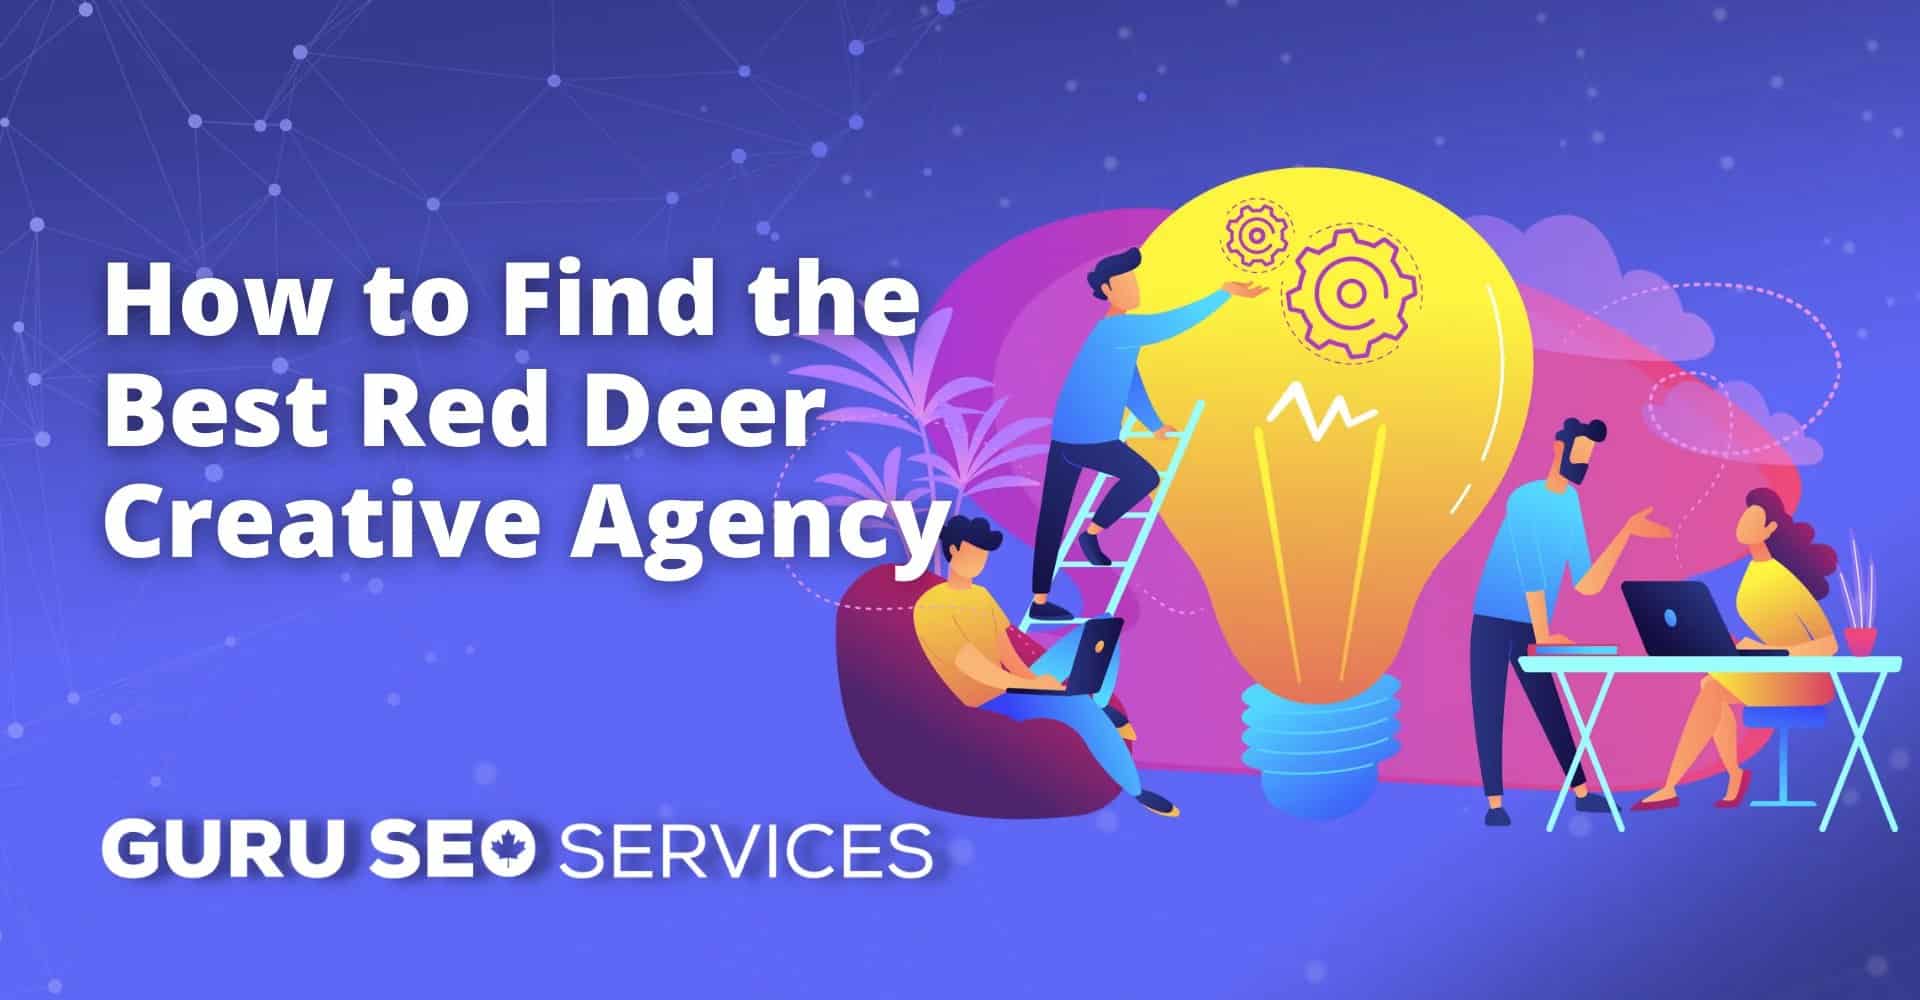 Looking to find the best creative agency in Red Deer?